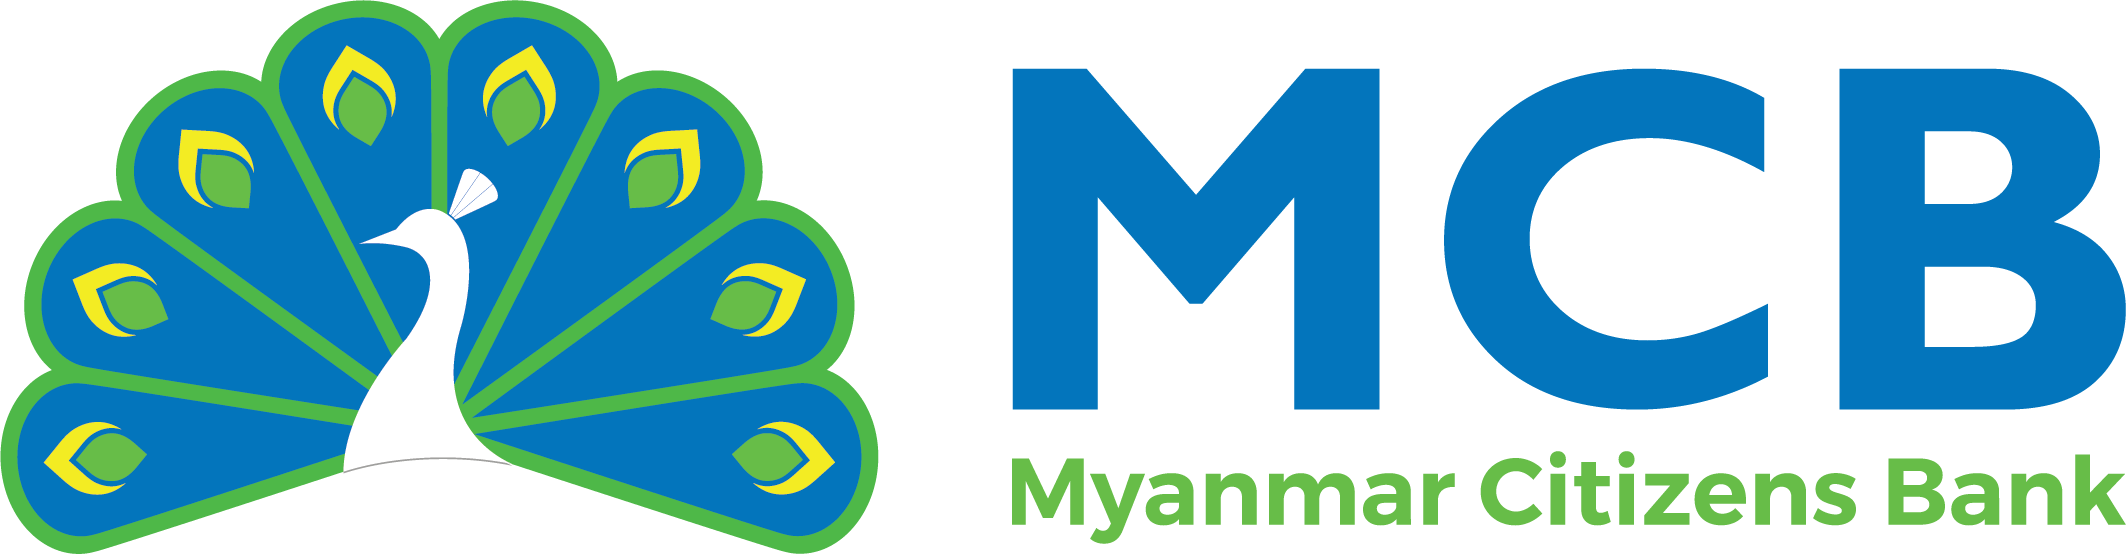 MYANMAR CITIZEN BANK